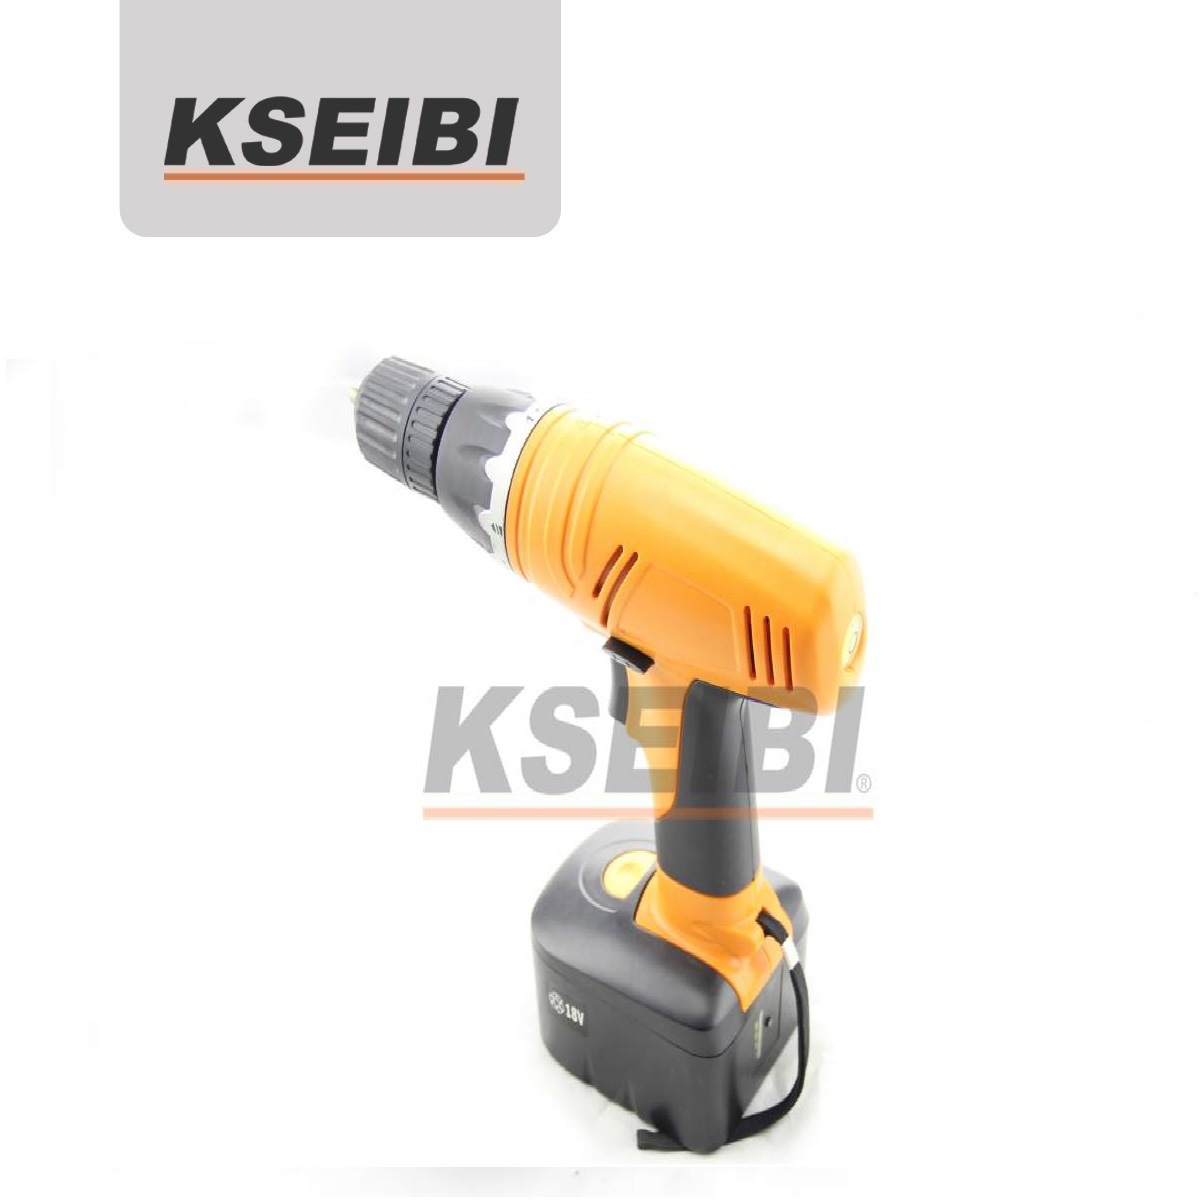 High Quality Kseibi 18V Cordless Drill/Electric Drill LED Light